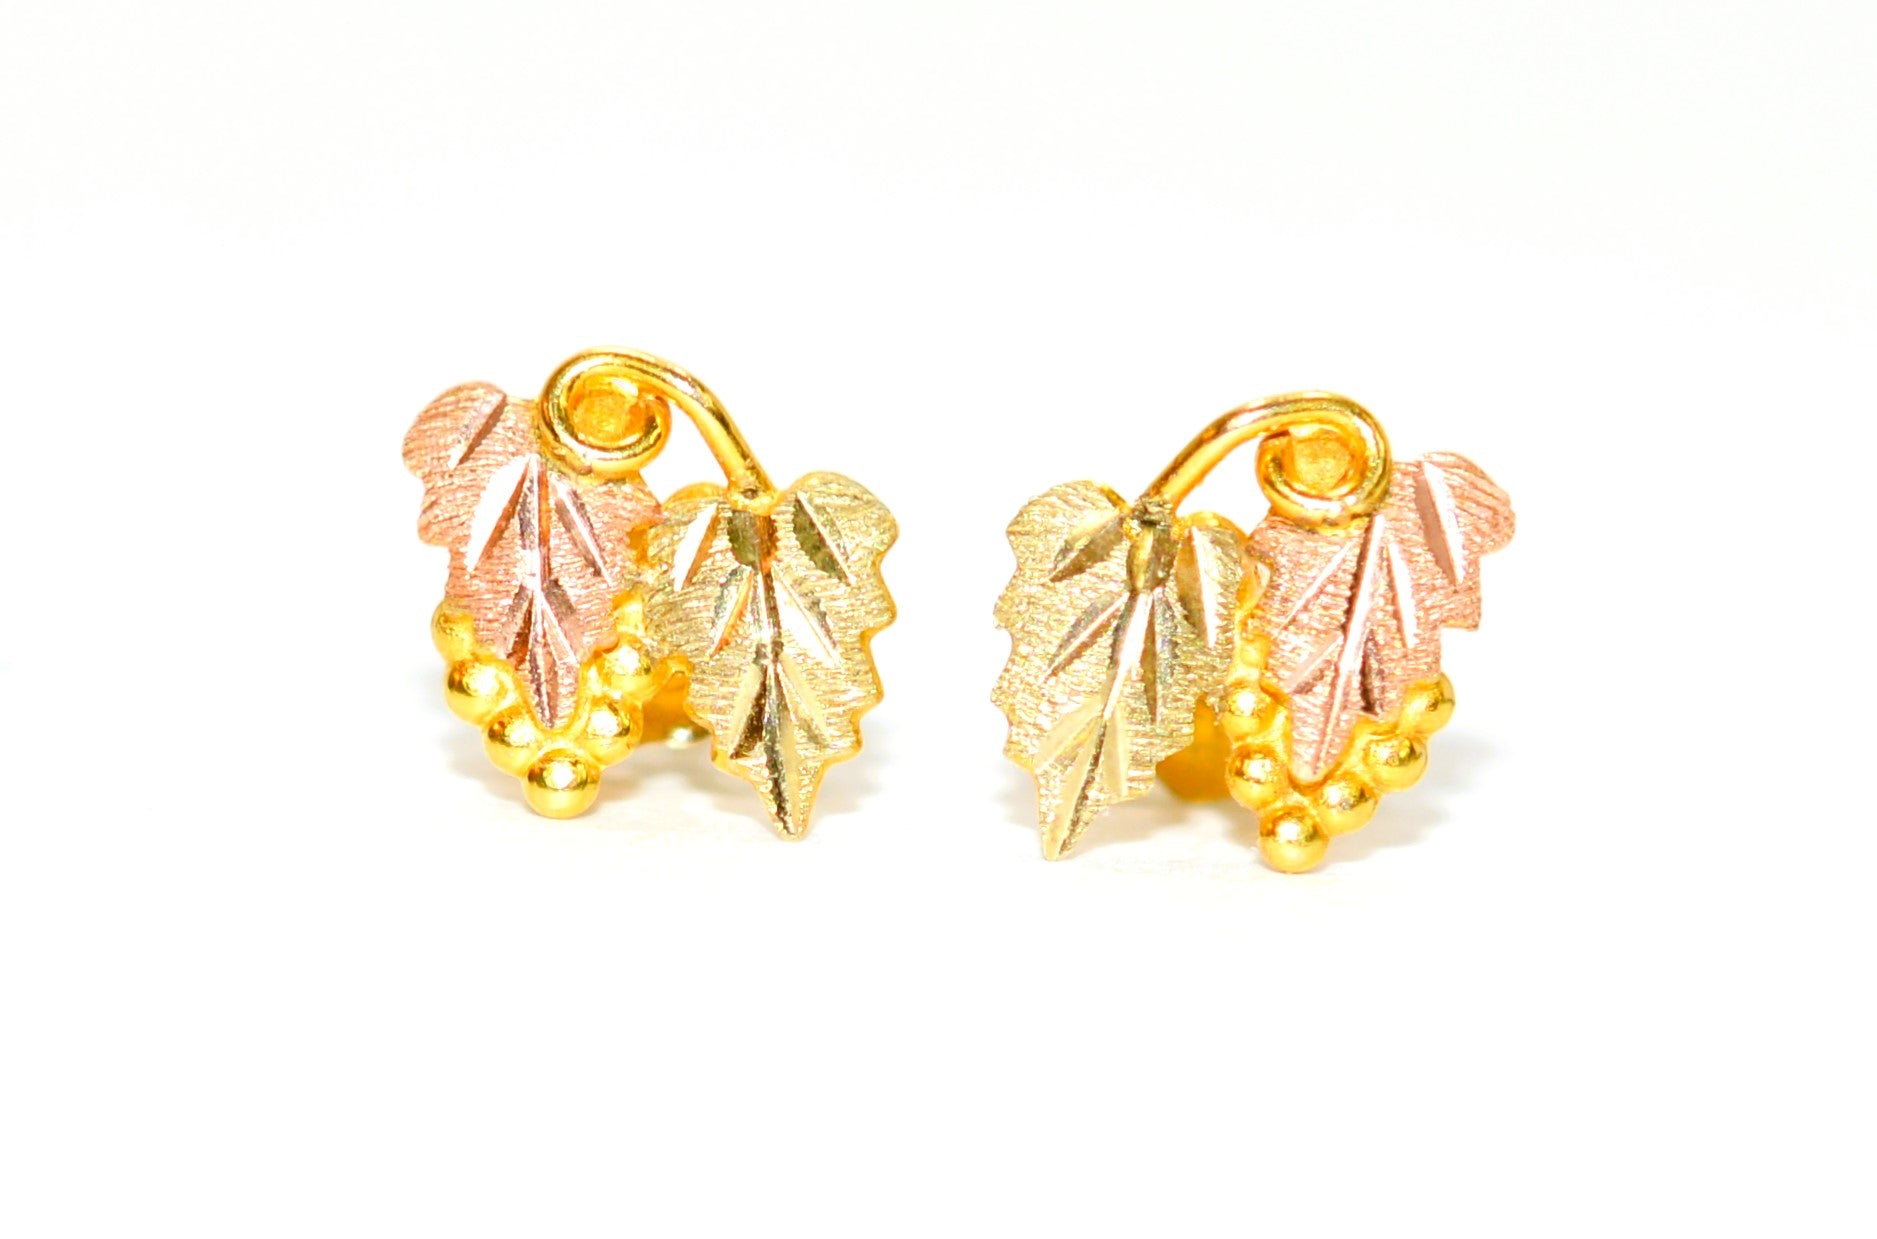 Black Hills Gold Earrings 10K Solid Gold Leaf Earrings Tri-Color Gold Earrings South Dakota Gold Stud Estate Earrings American USA Vintage